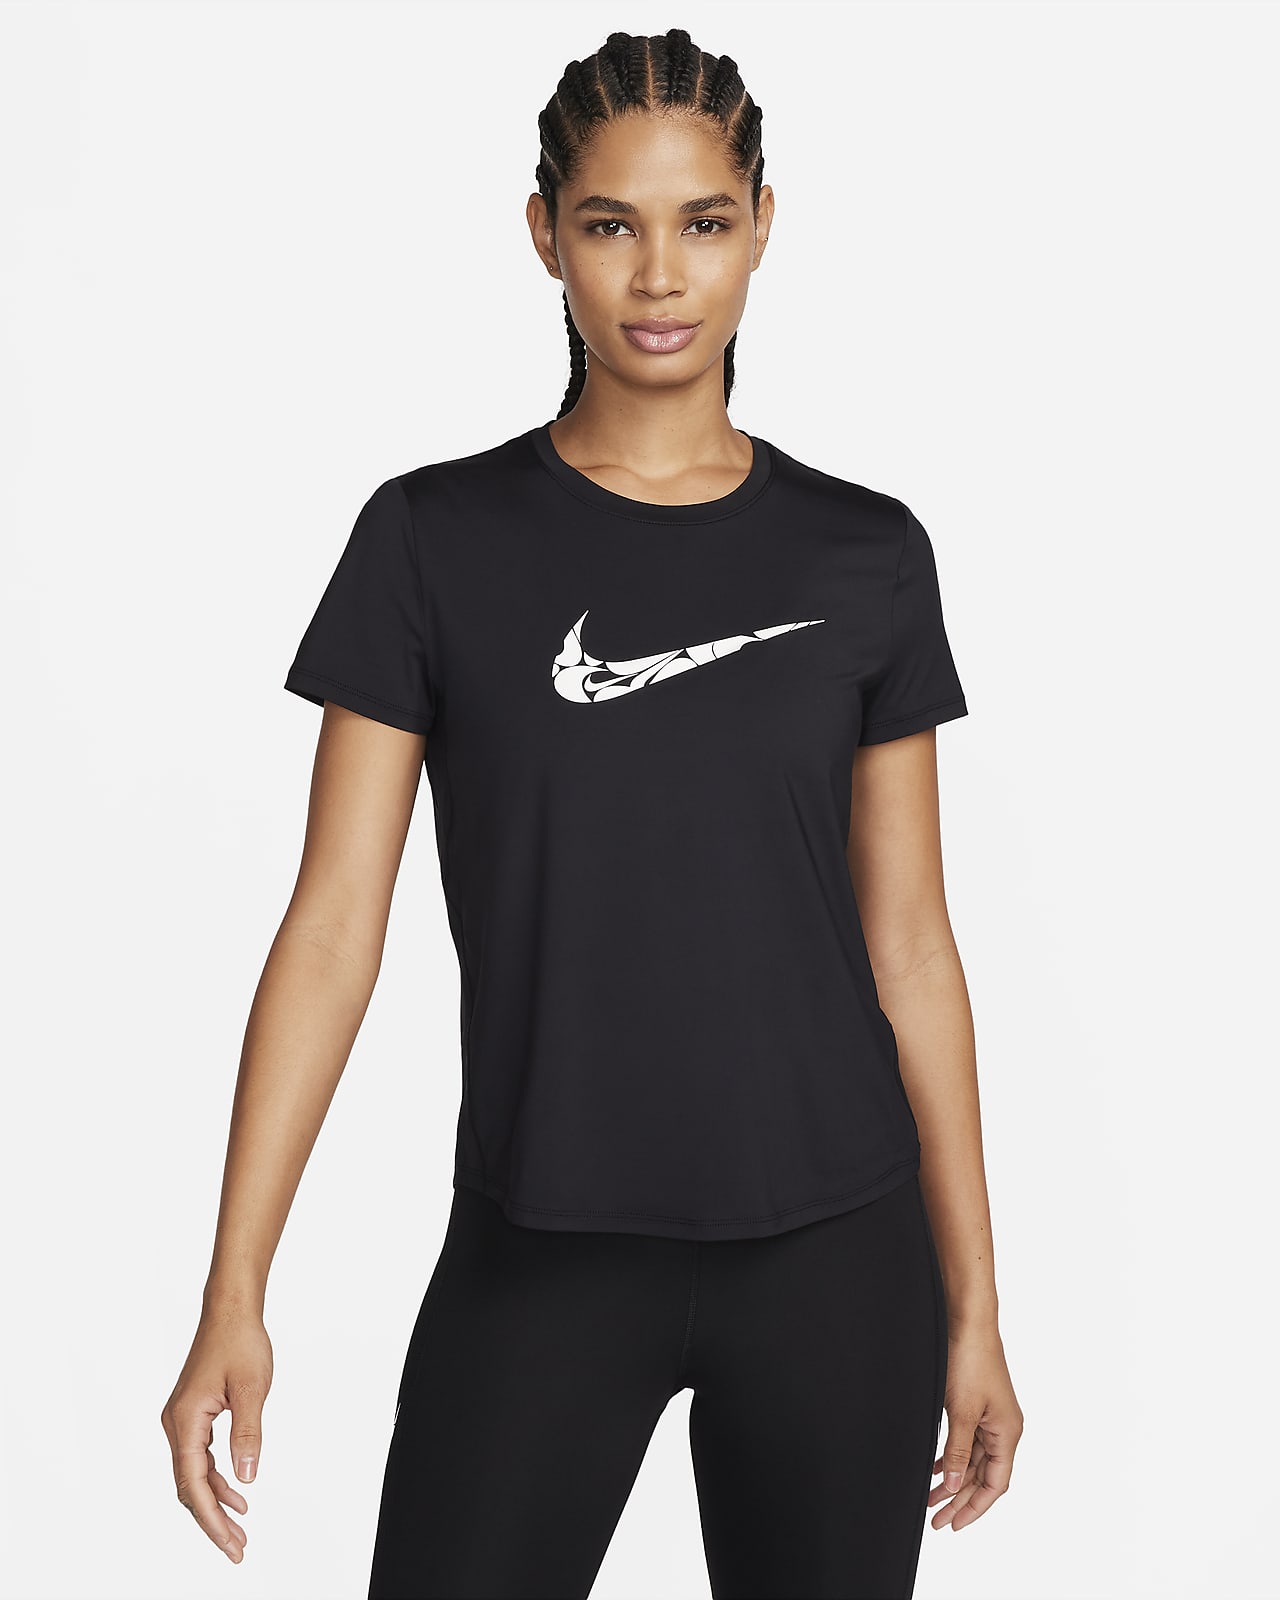 Nike One Swoosh Dri-FIT hardlooptop met korte mouwen voor dames